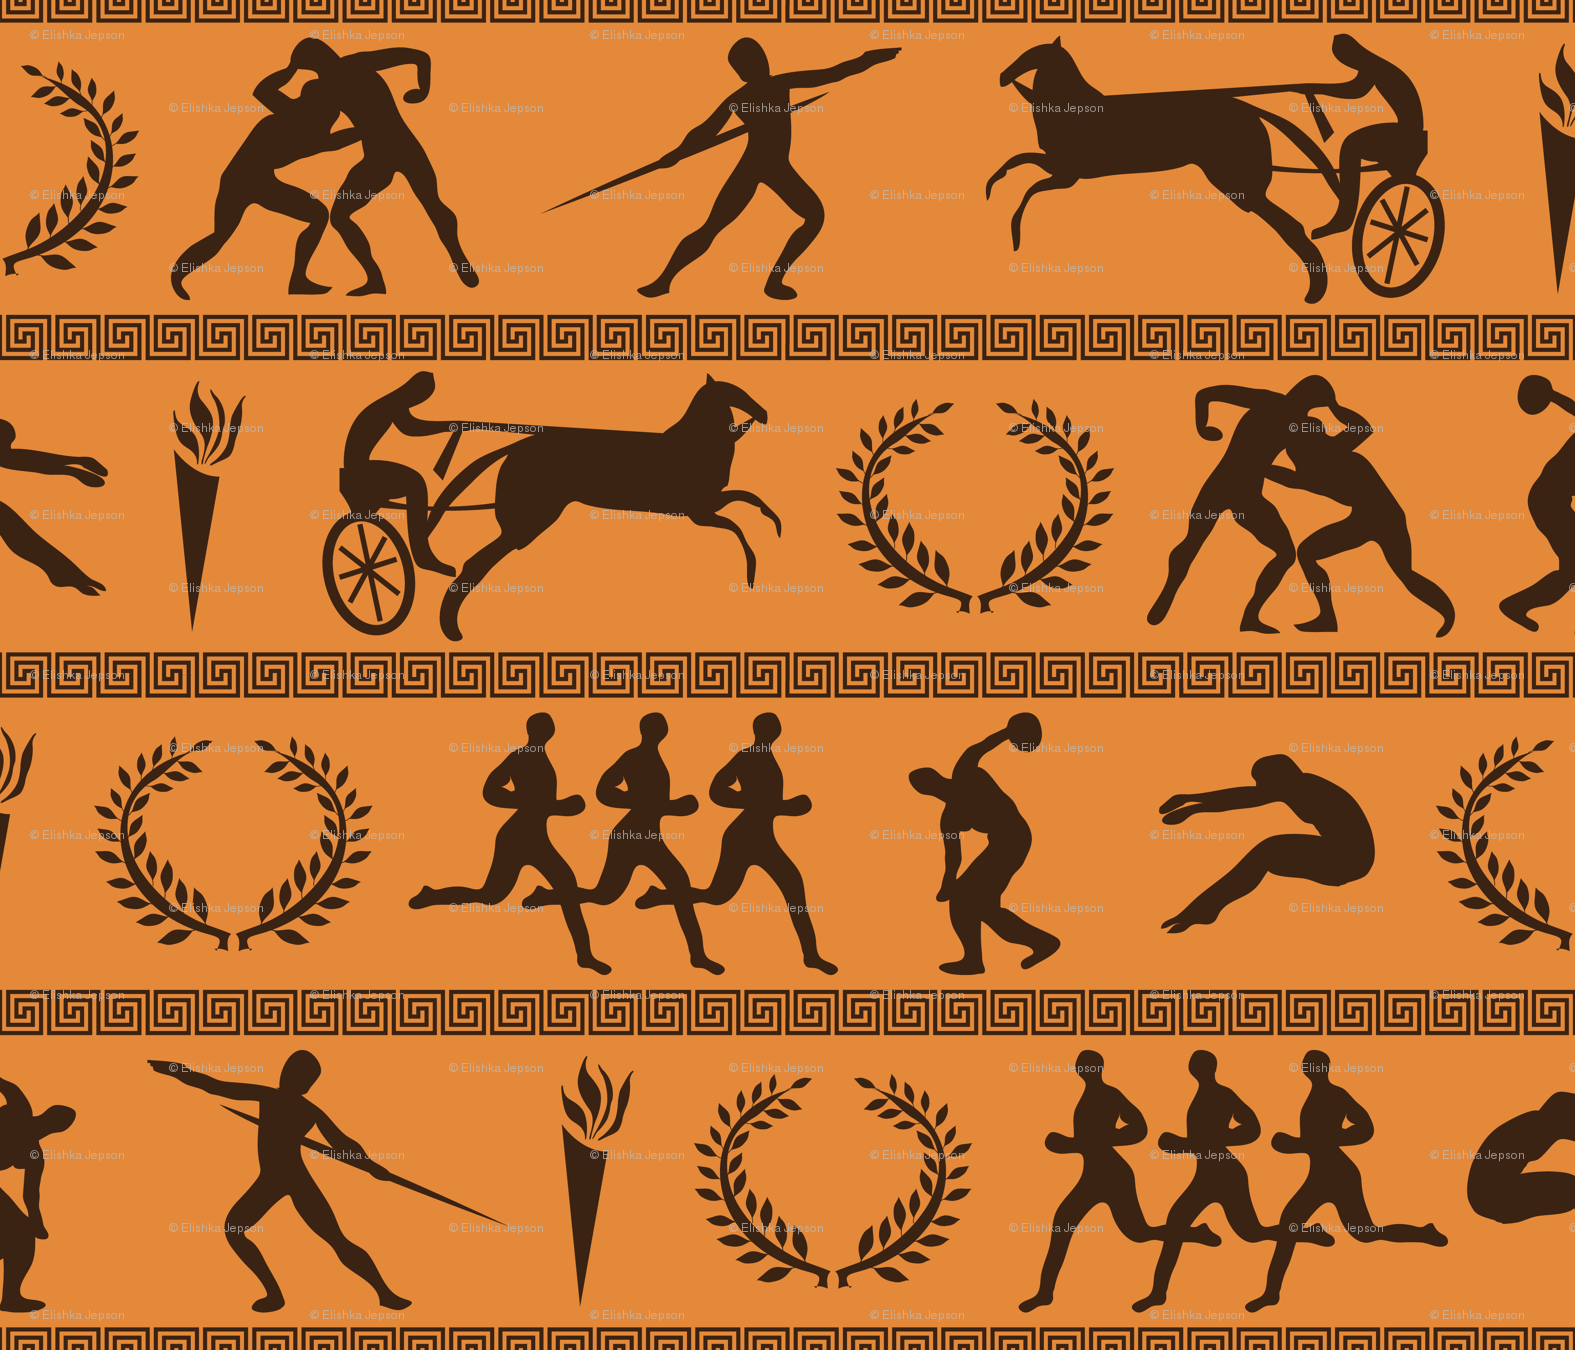 Entertainment Blog Post 5 Ancient Olympics